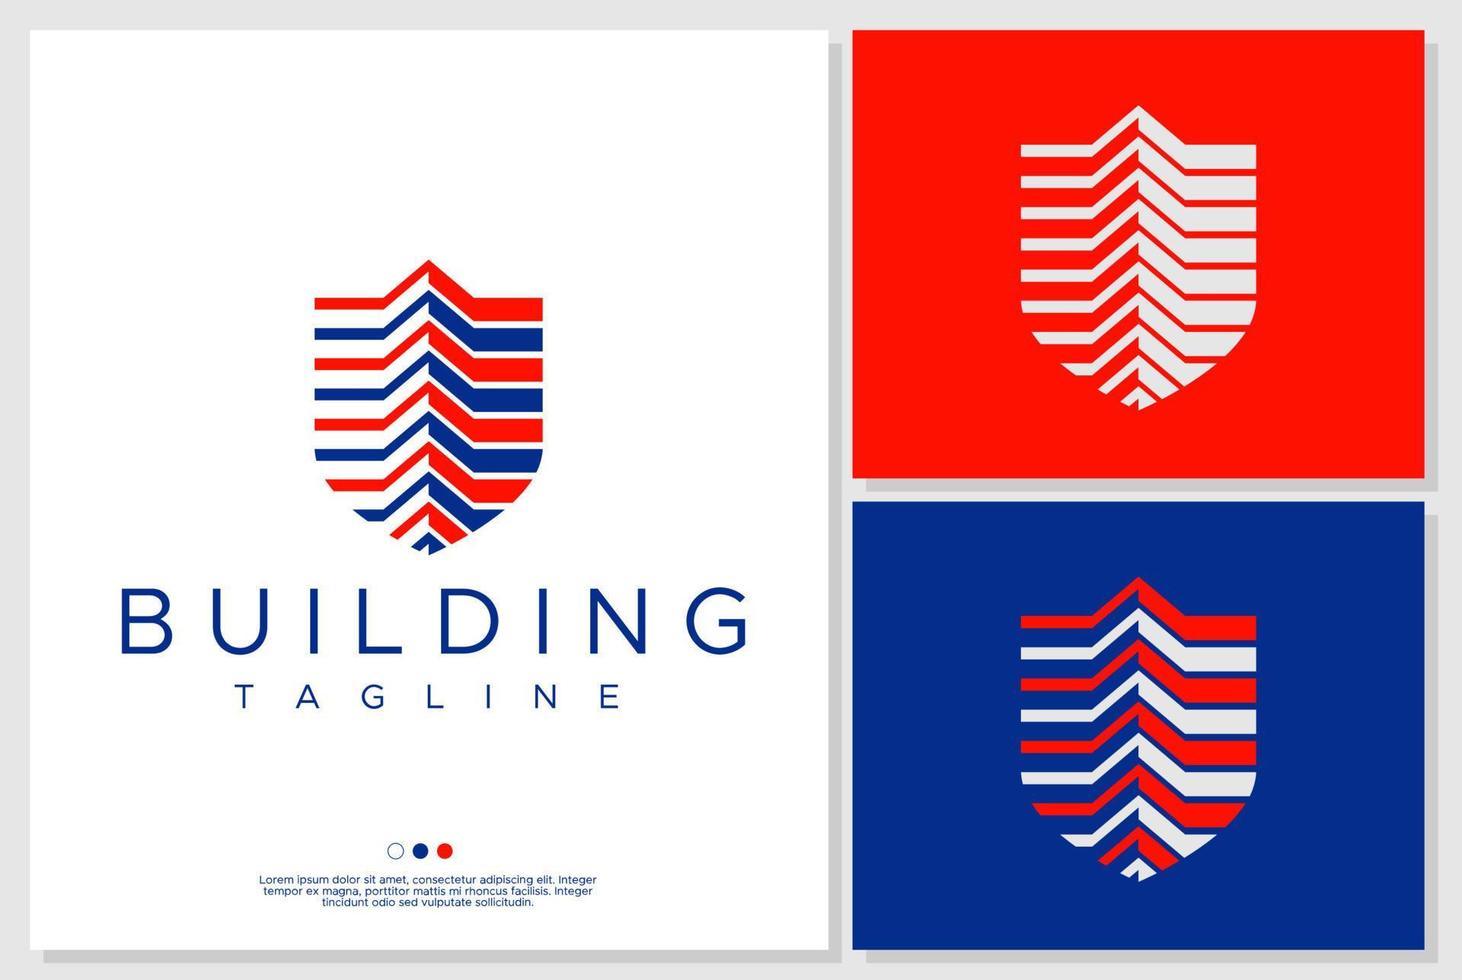 Building shield logo design template. Building logo in shield form. vector